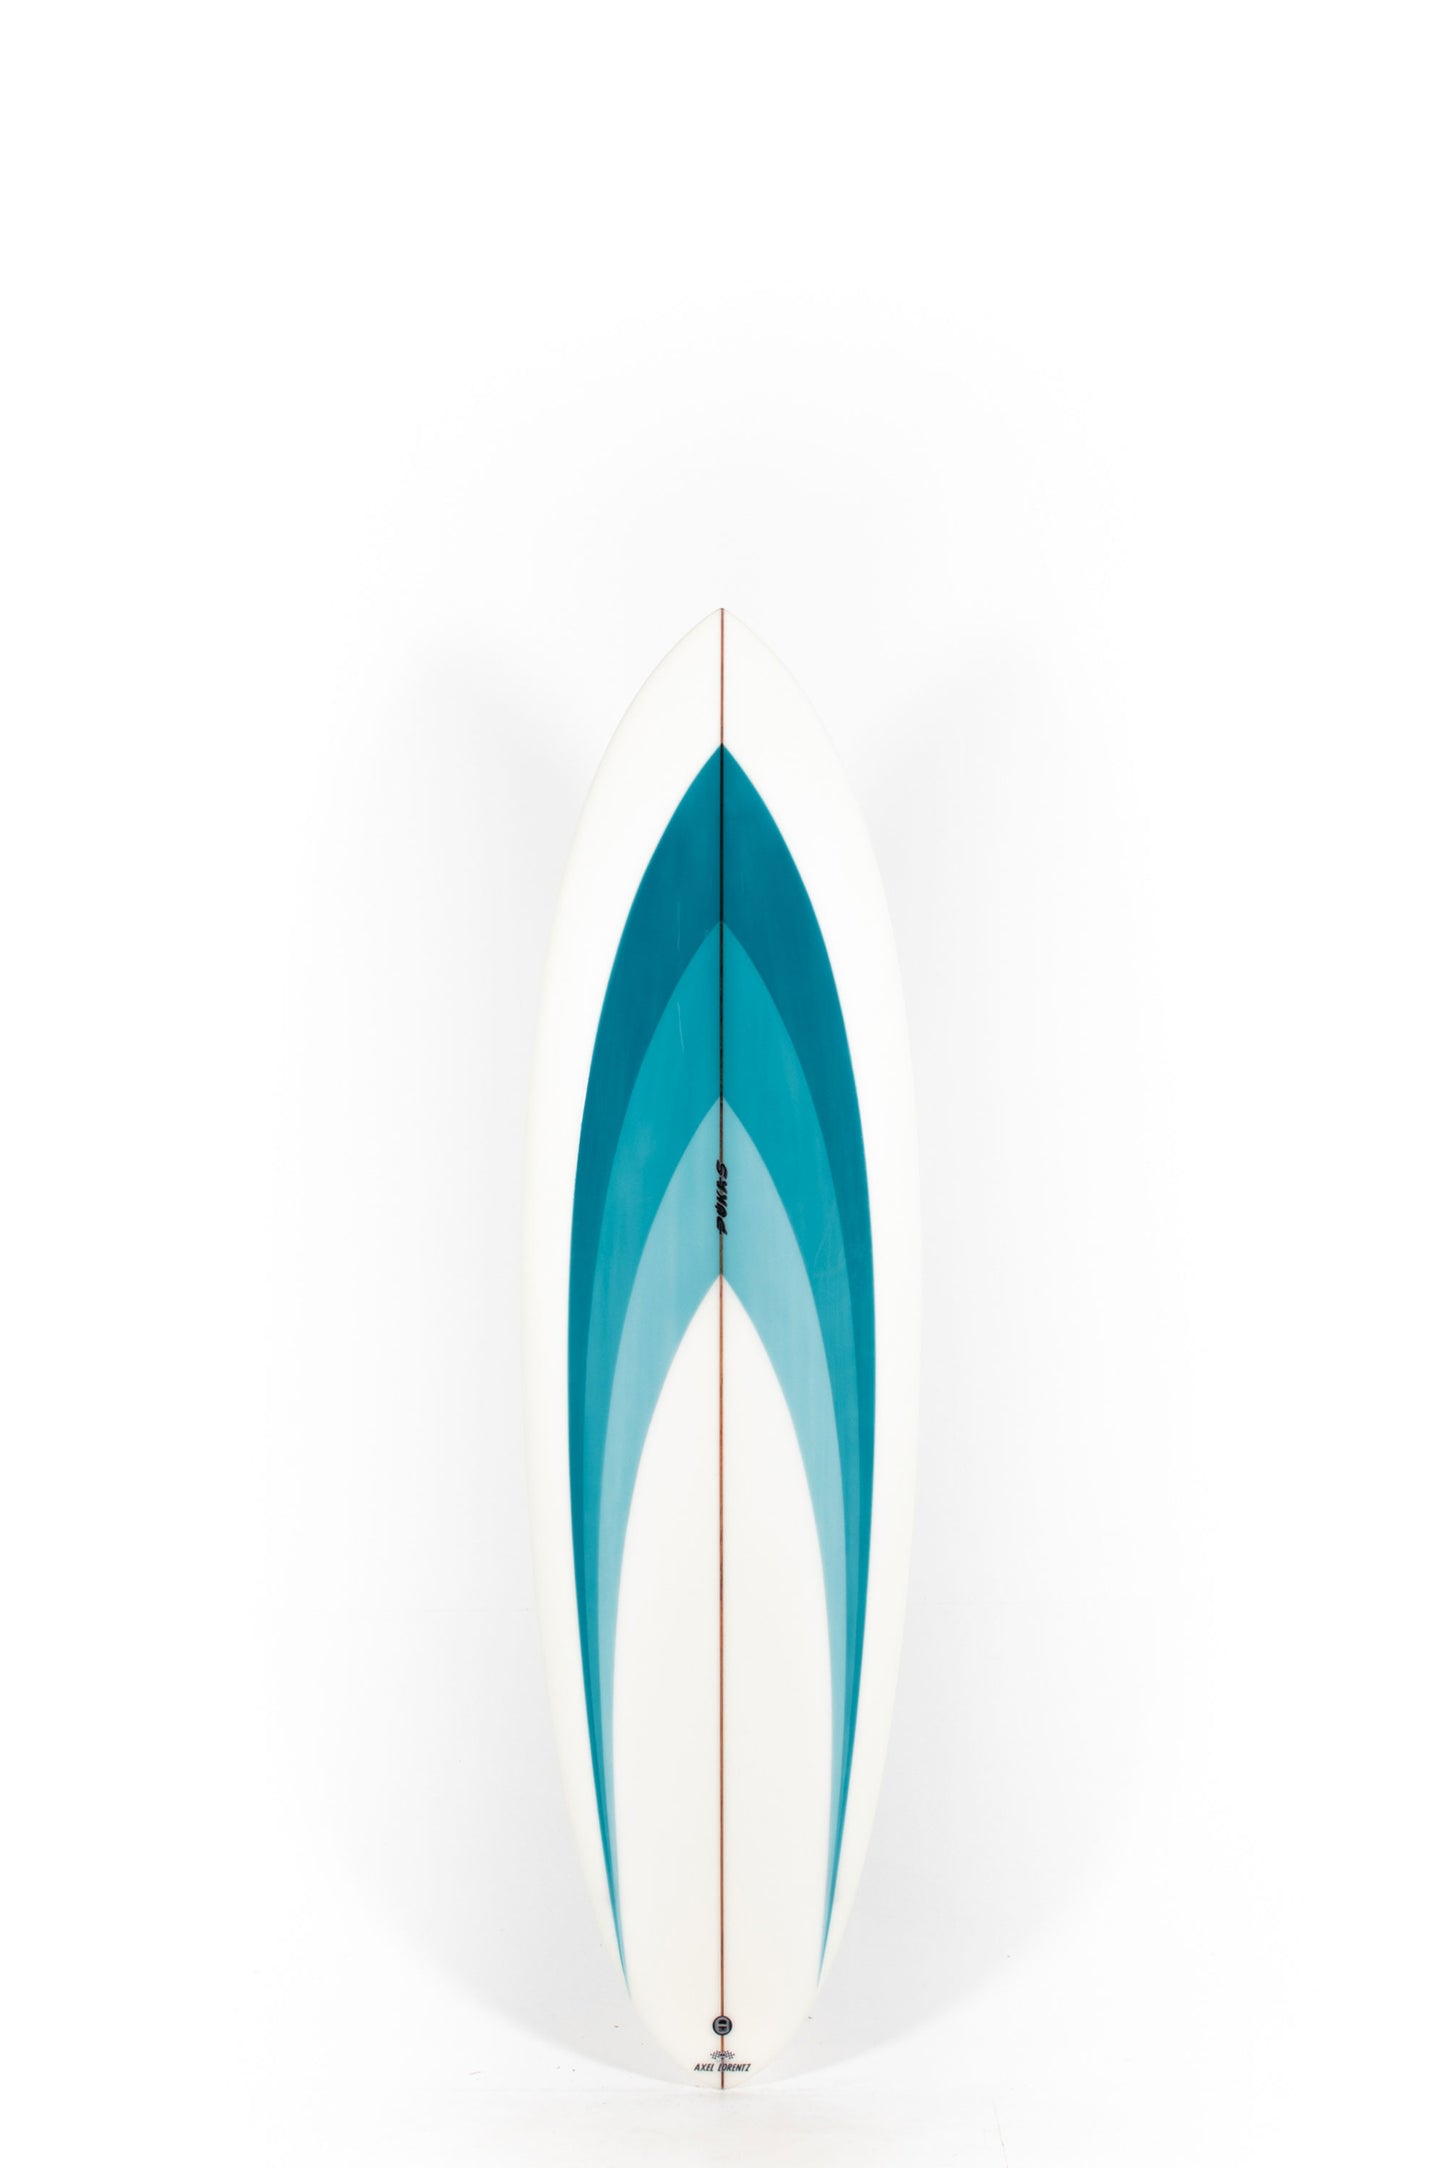 Pukas Surf Shop - Pukas Surfboard - LADY TWIN by Axel Lorentz - 6’4” x 20,75 x 2,75 - 37,93L - AX07717